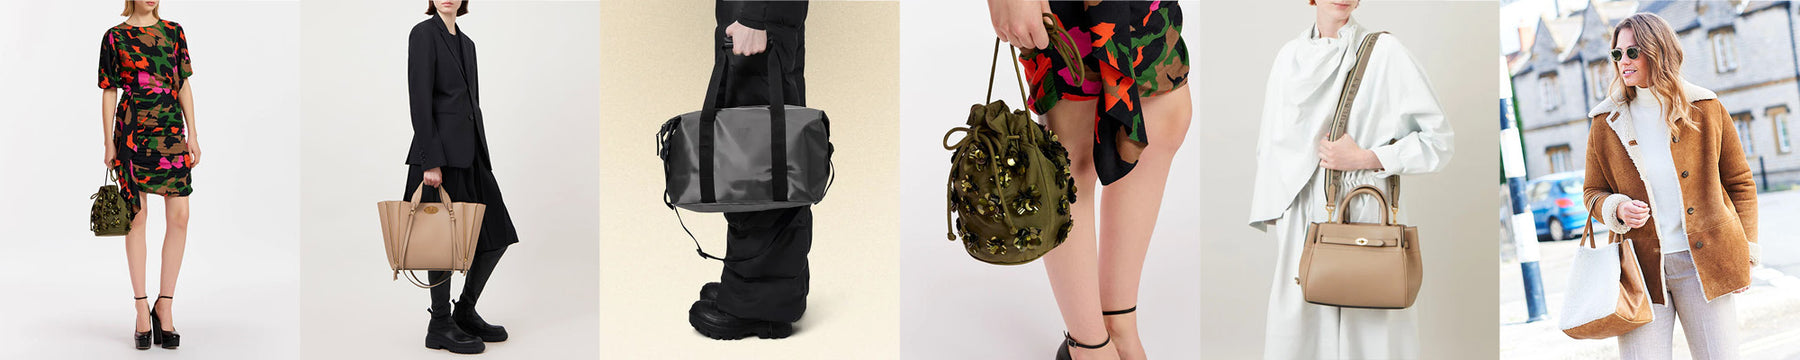 Woman » Bags » Handbags